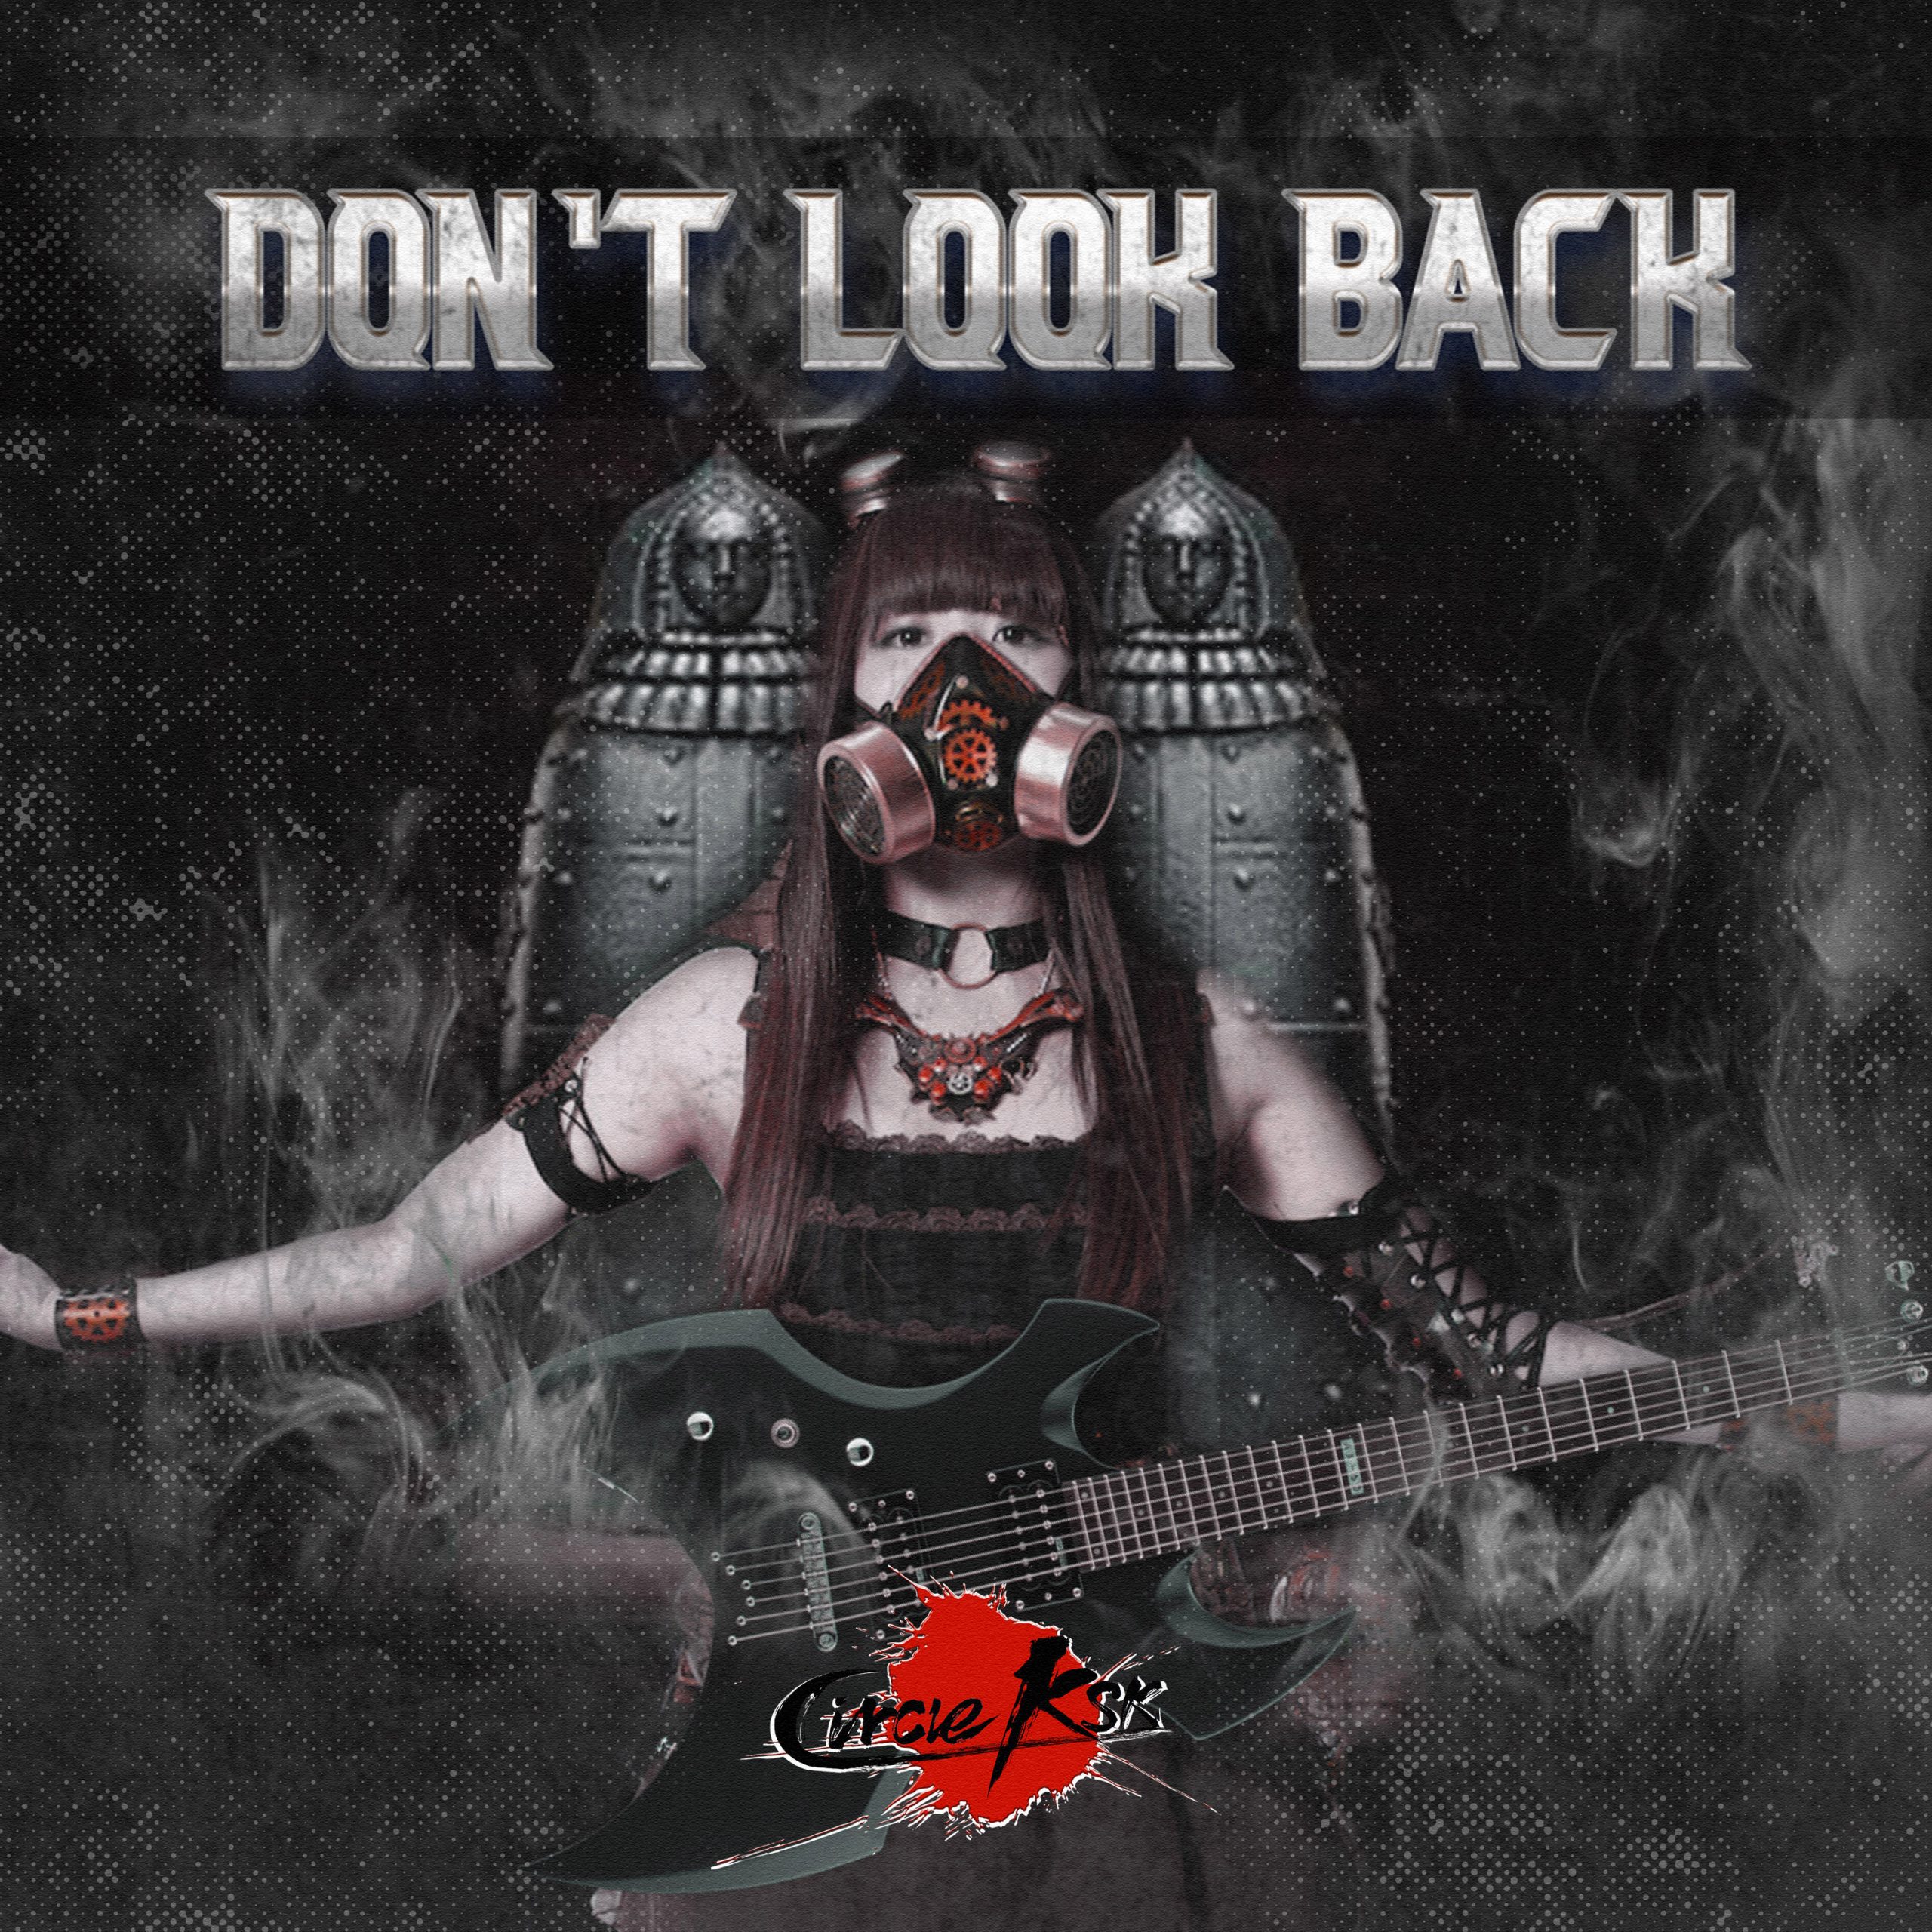 CircleKSK - "DON'T LOOK BACK"